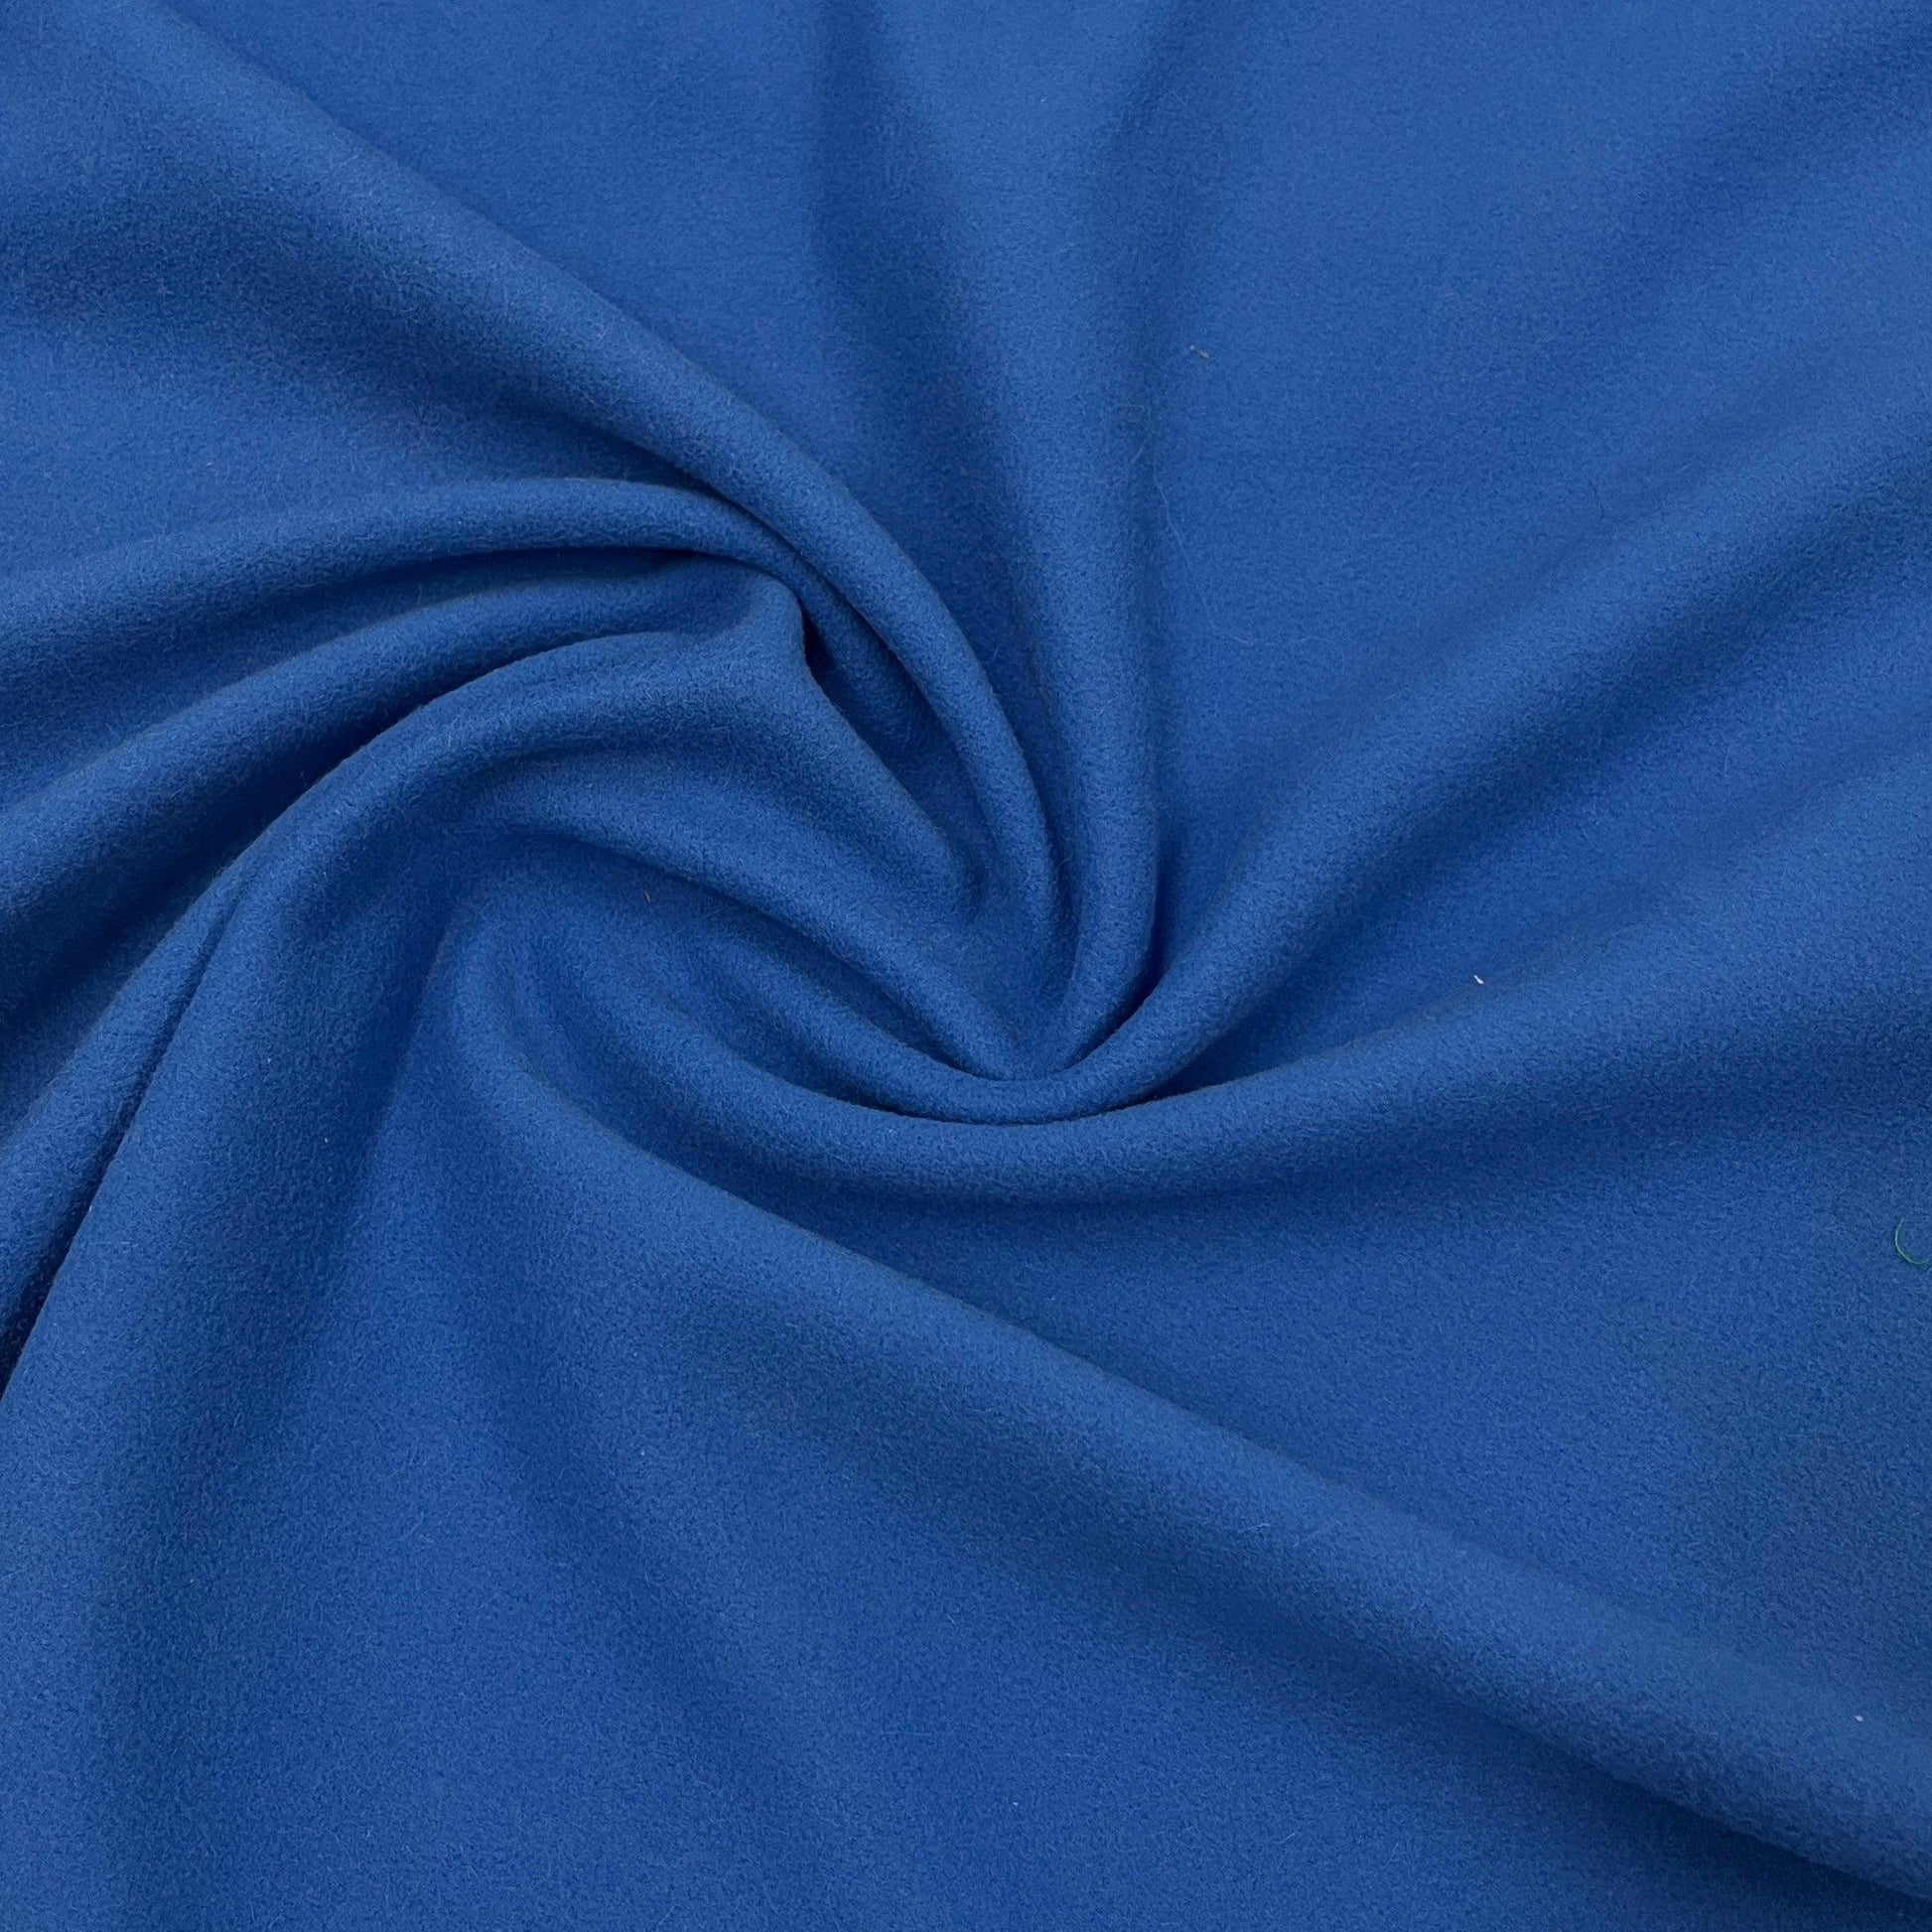 Brightest Blue Polyester/Spandex Fleece Fabric - 280 GSM